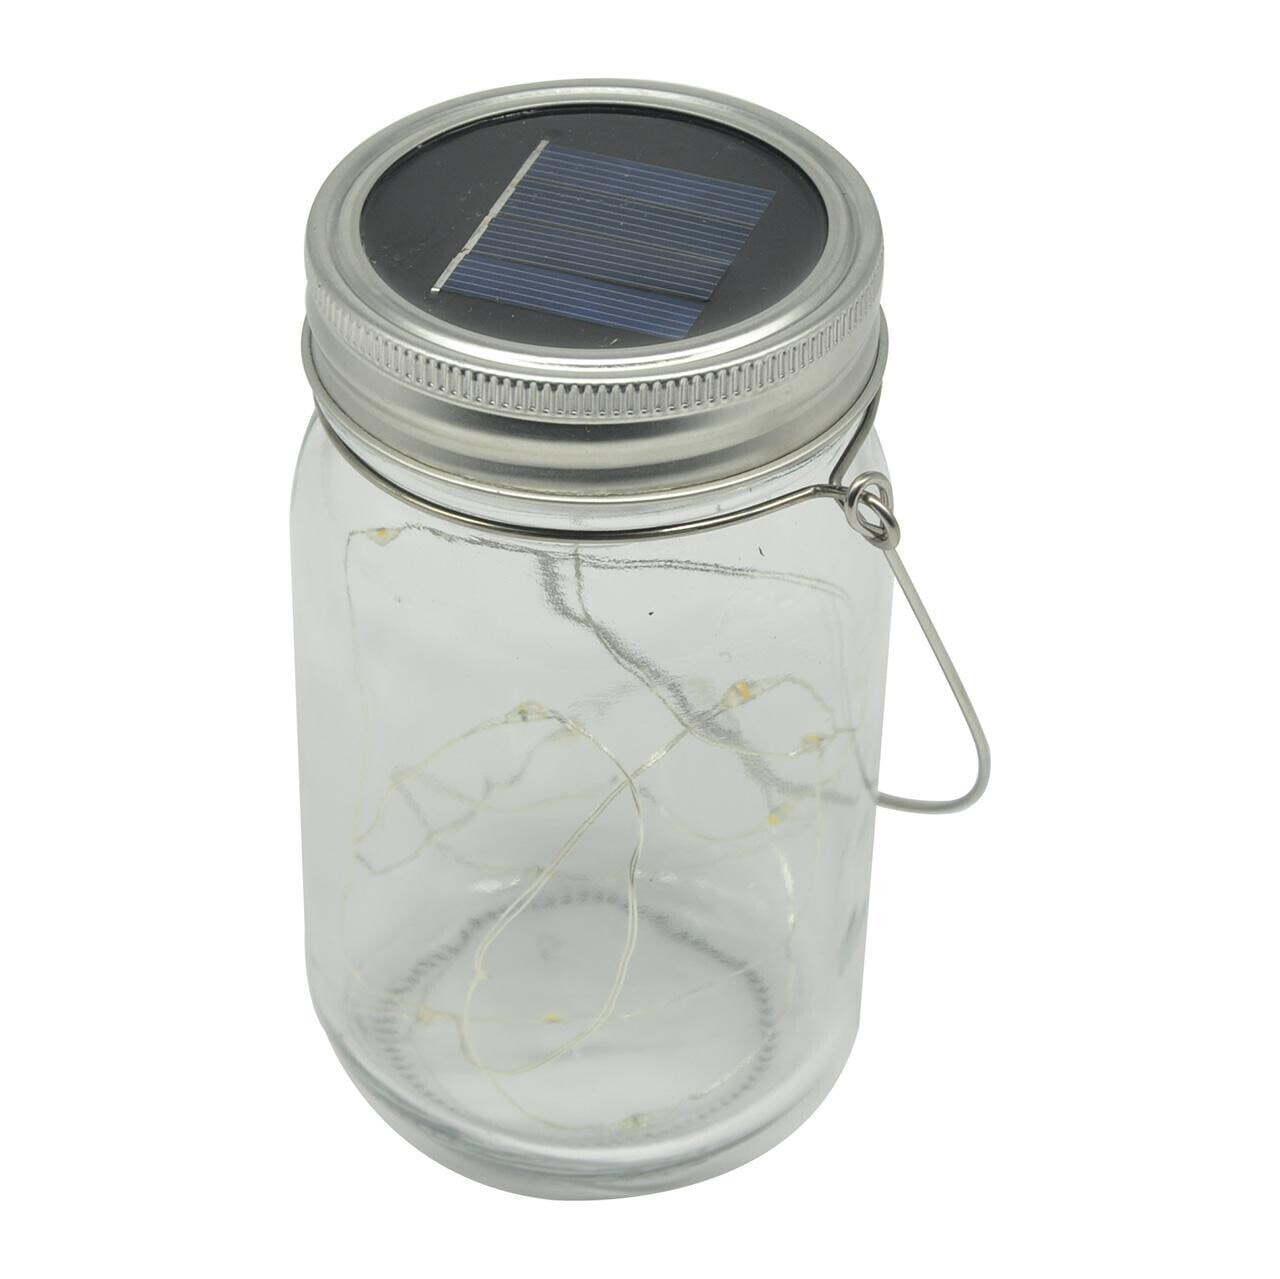 Volteno Solar Lamp Jar